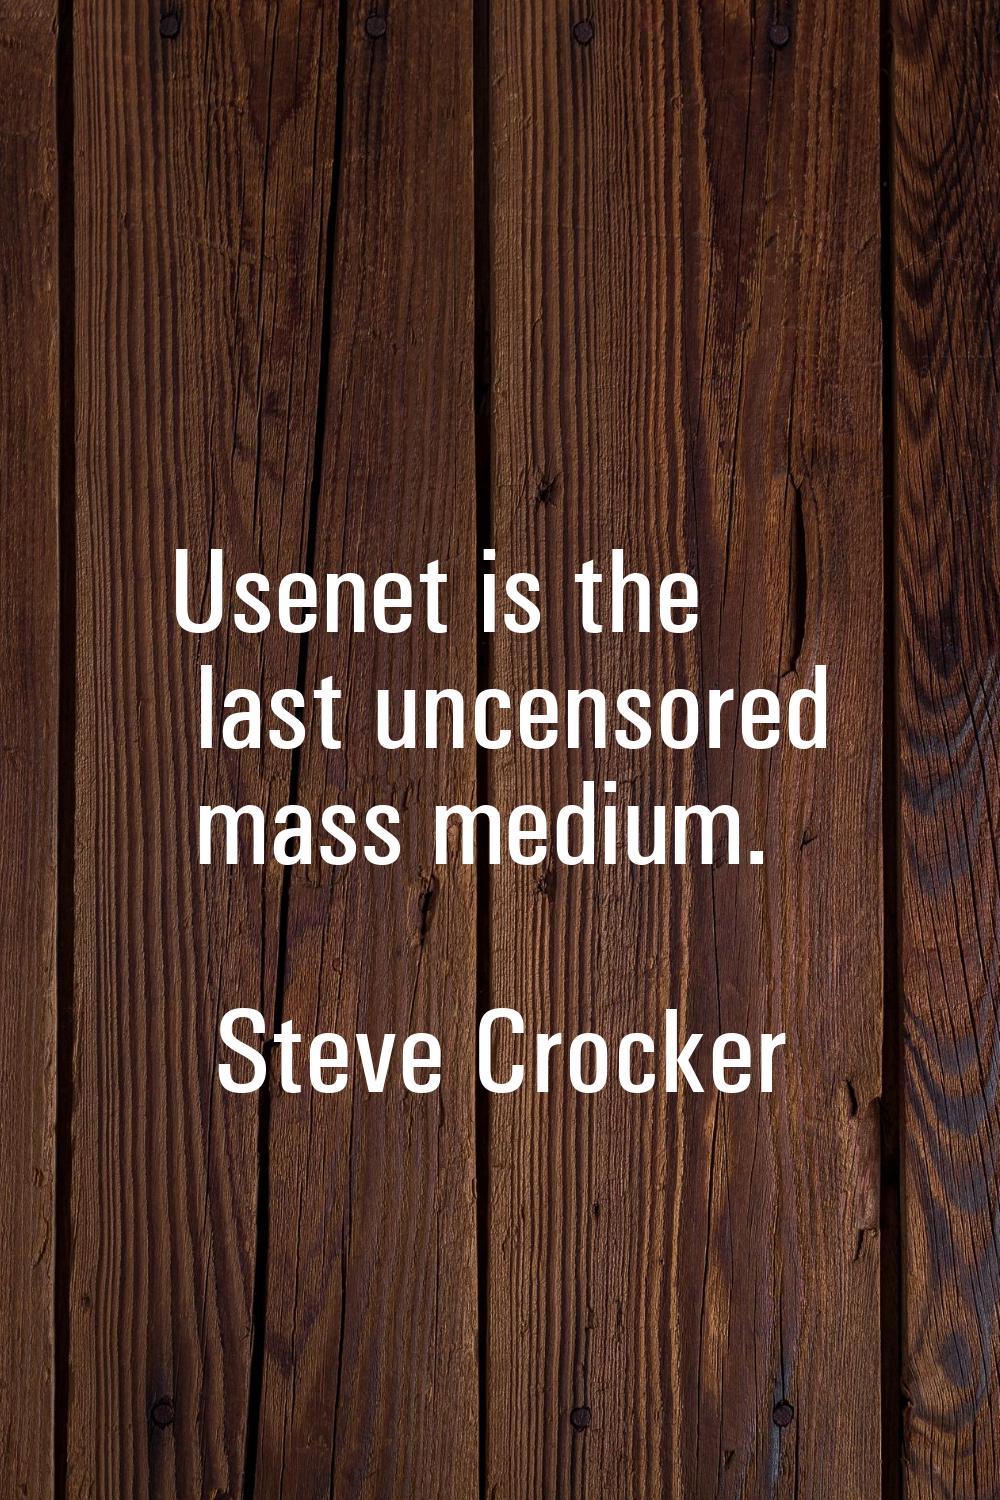 Usenet is the last uncensored mass medium.